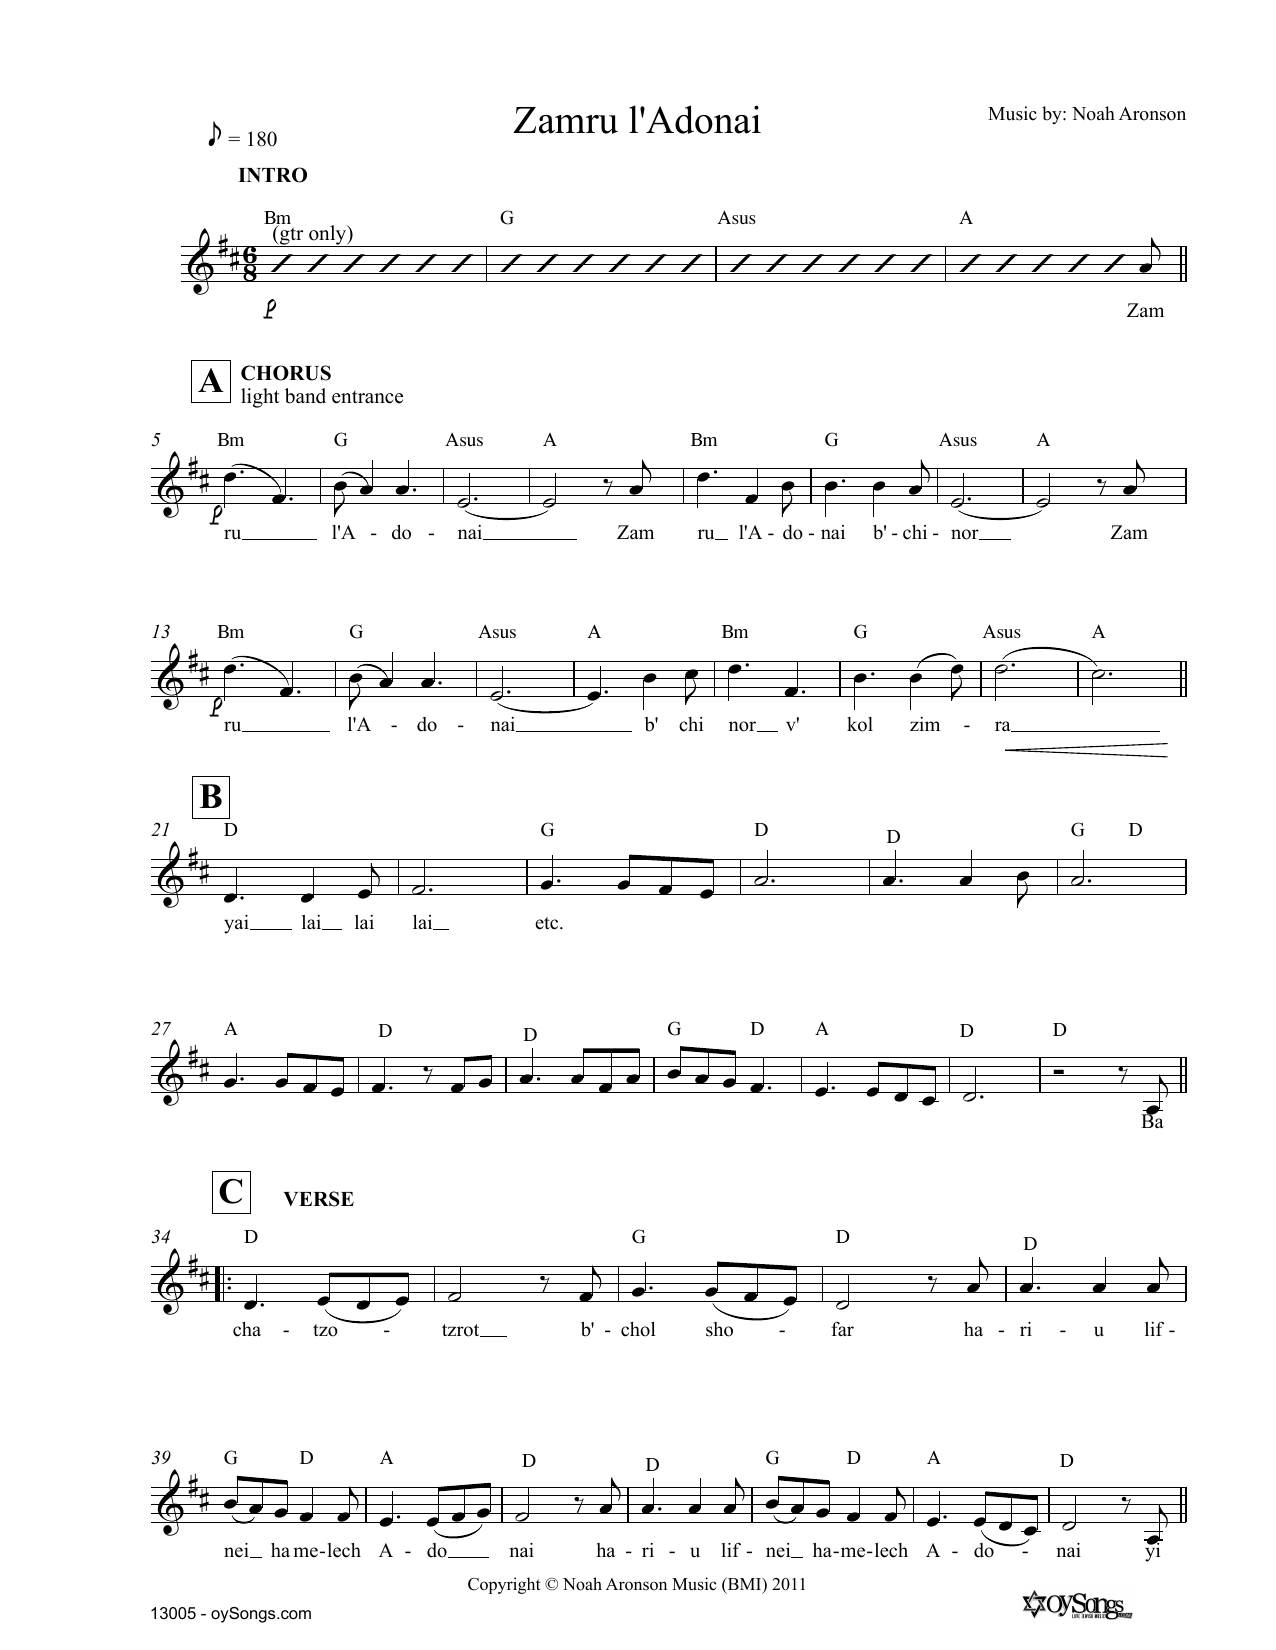 Download Noah Aronson Zamru l'Adonai Sheet Music and learn how to play Melody Line, Lyrics & Chords PDF digital score in minutes